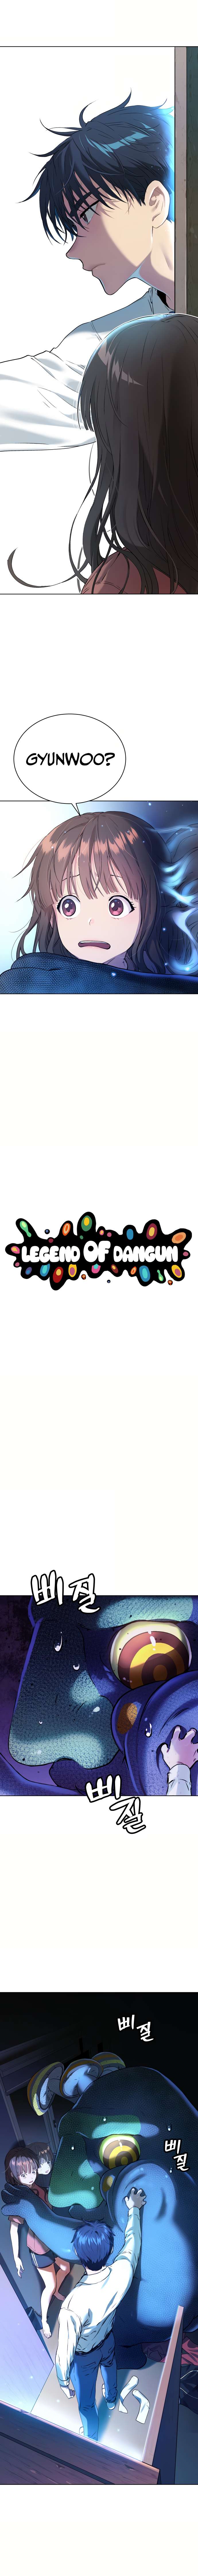 Oh! Dangun - chapter 9 - #2